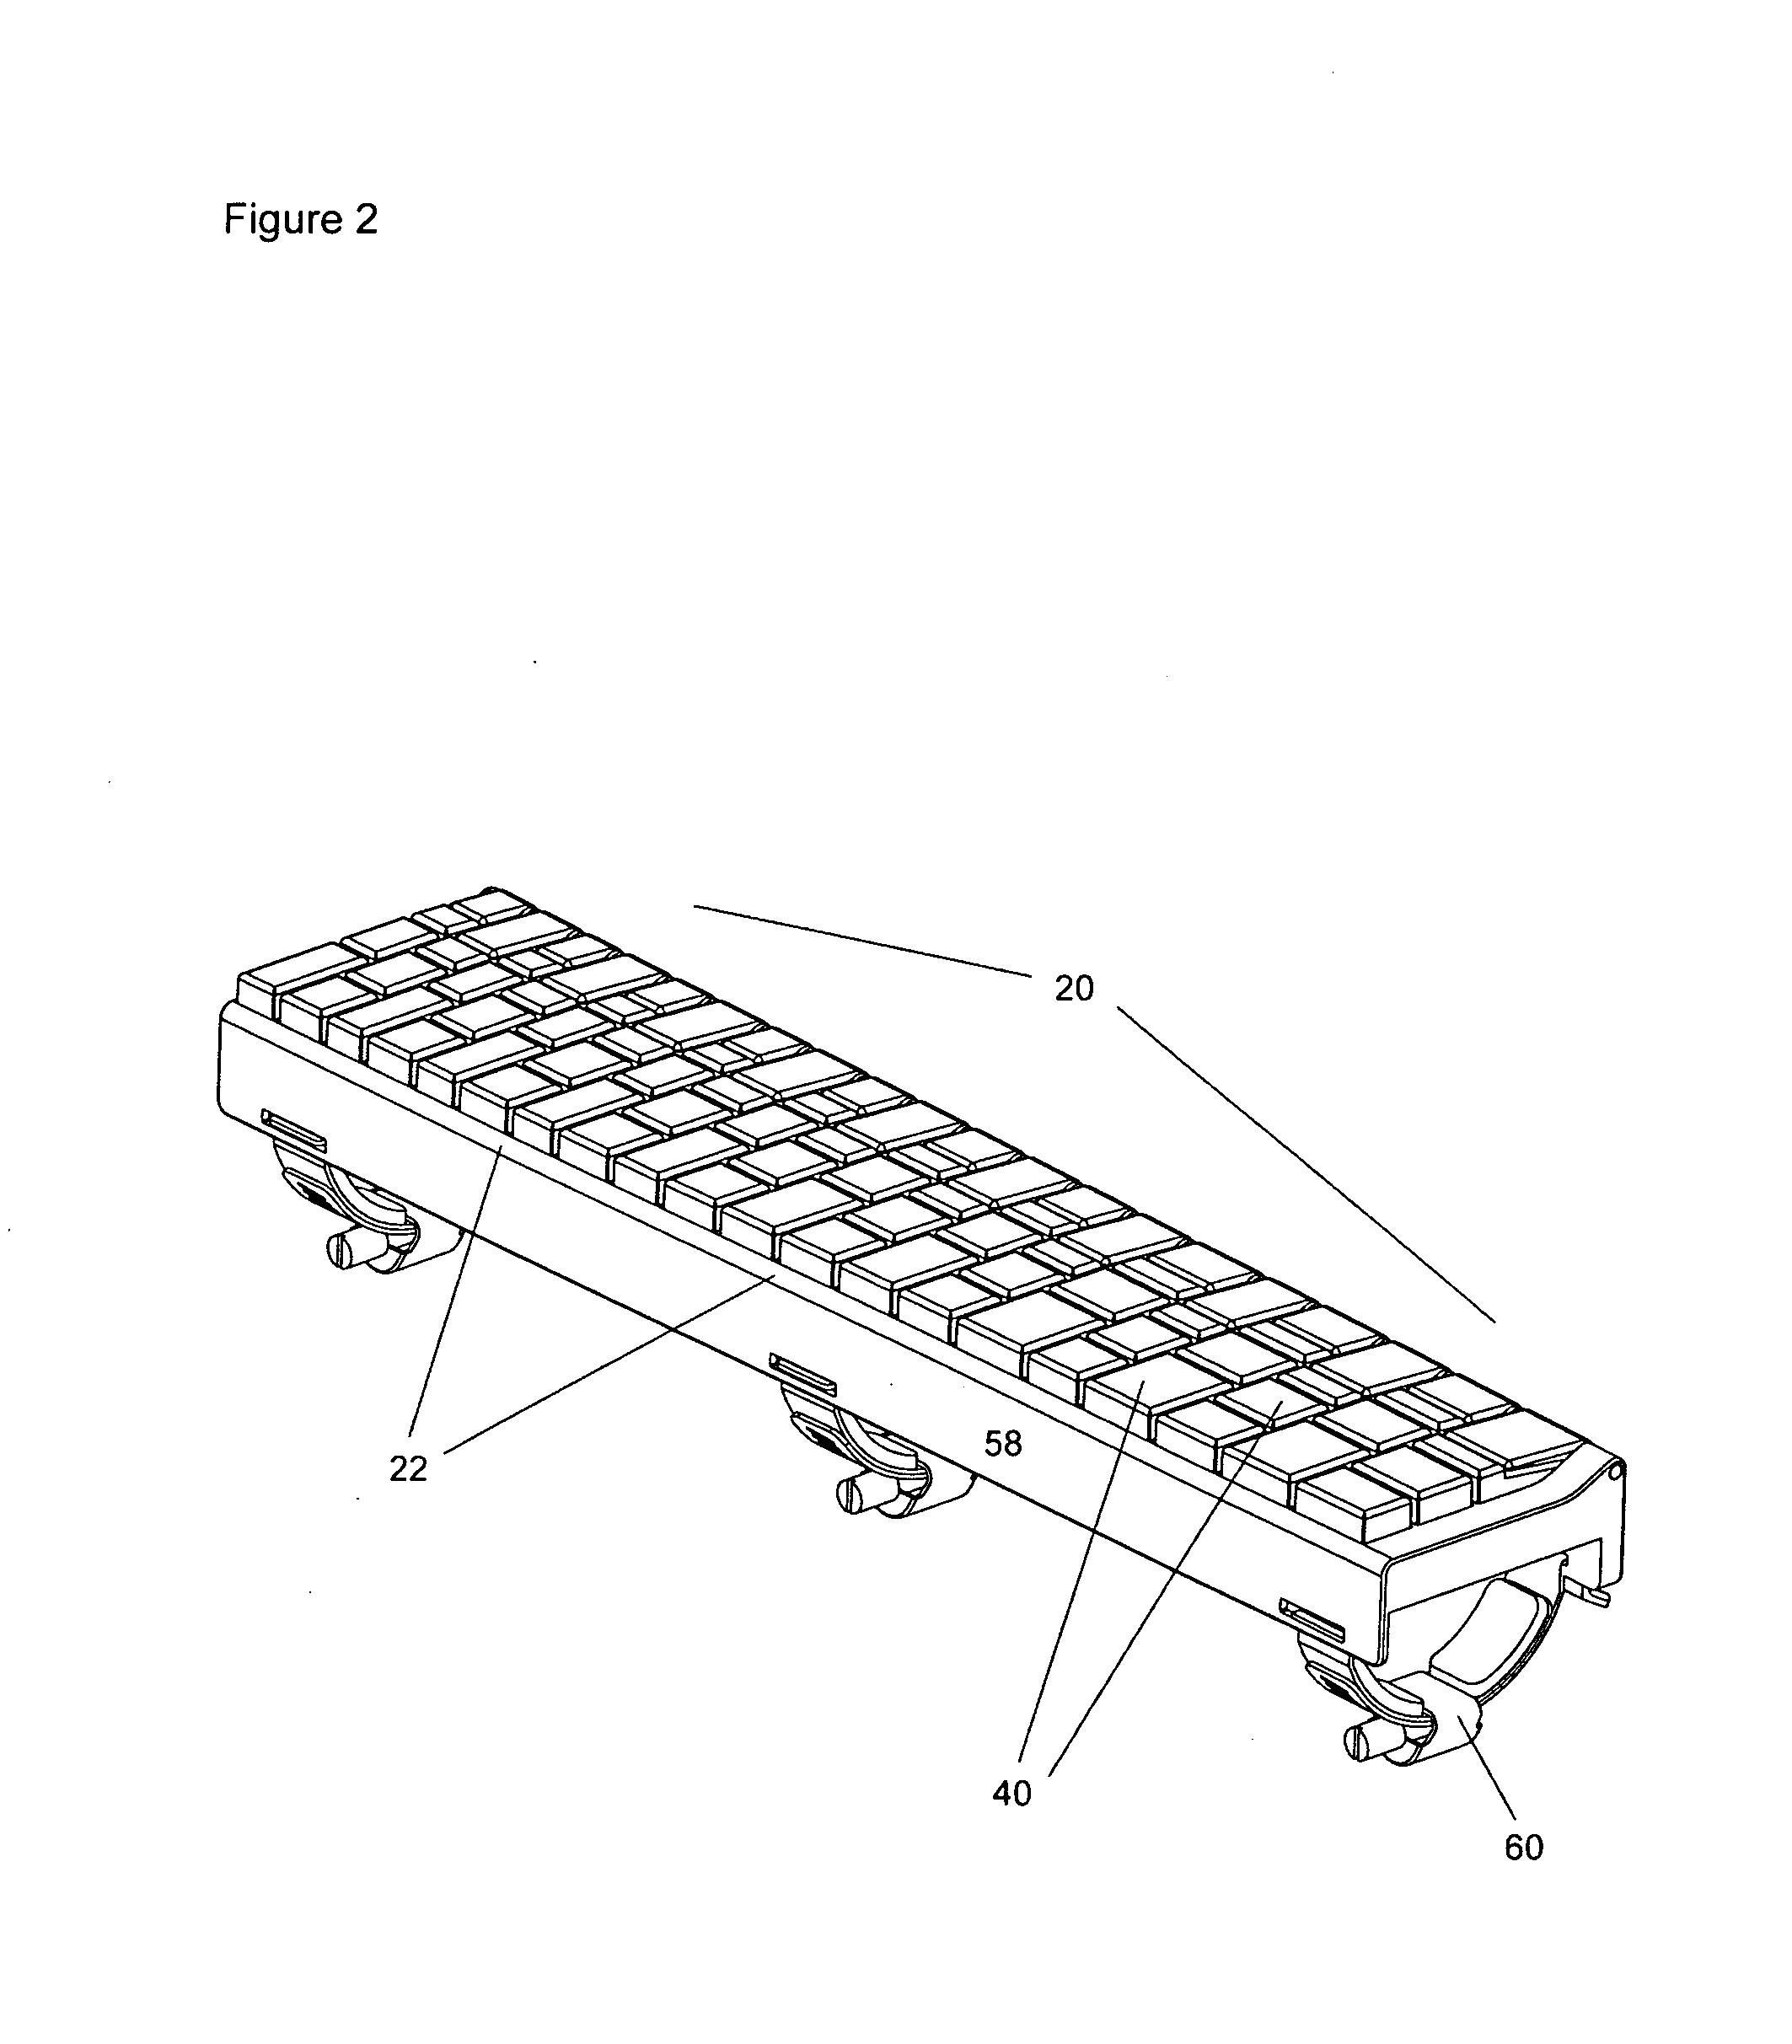 Stringed instrument keyboard